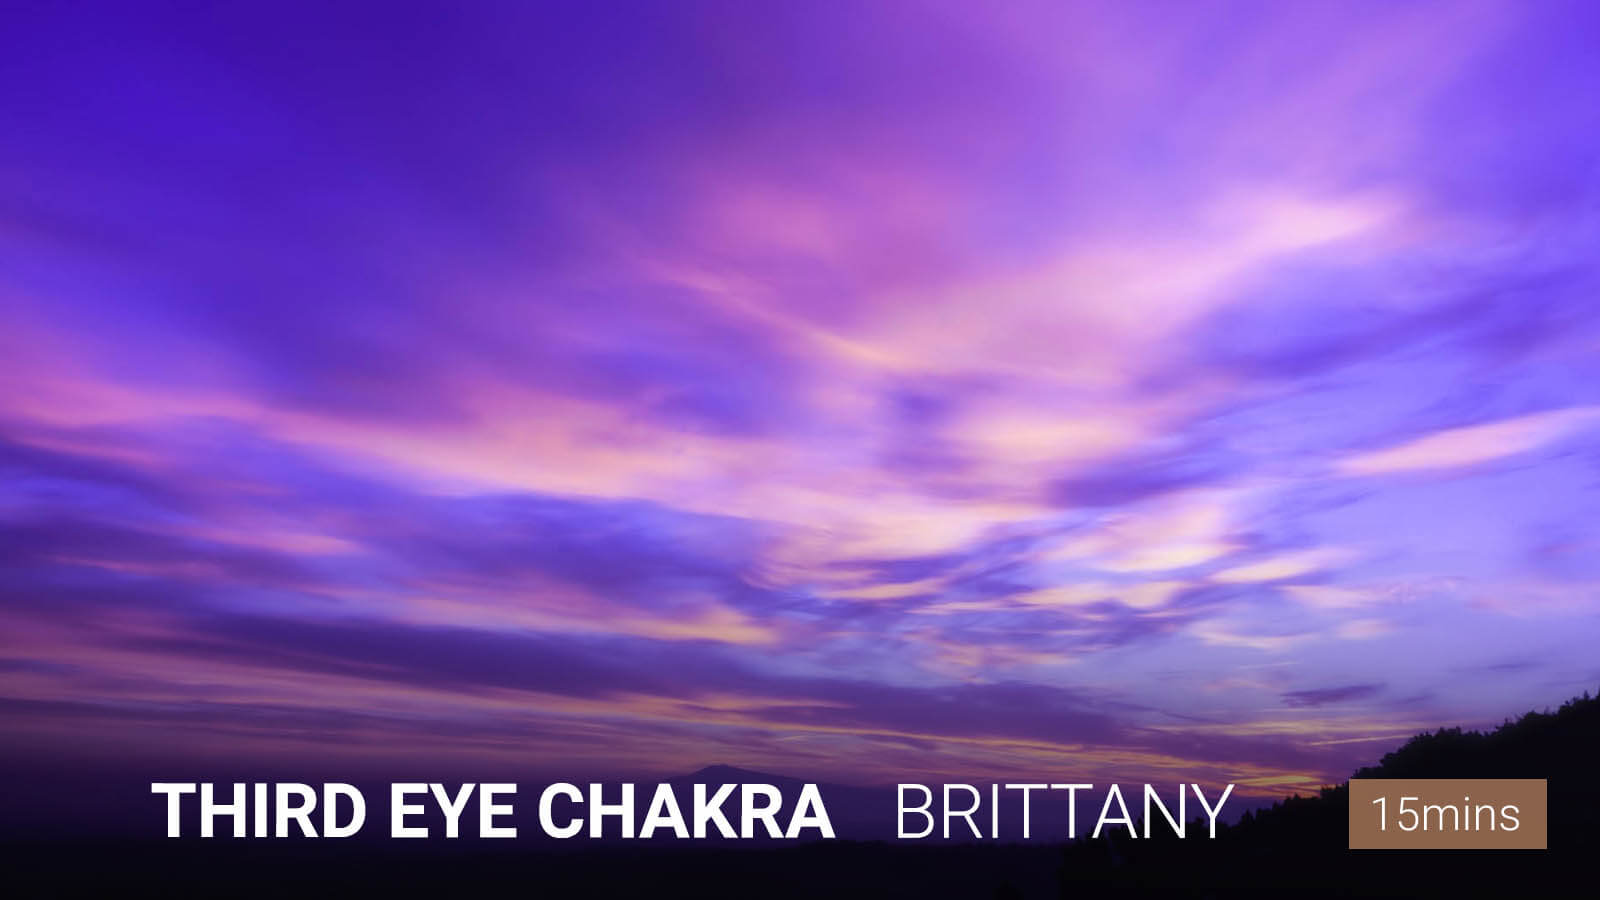 Third Eye Chakra